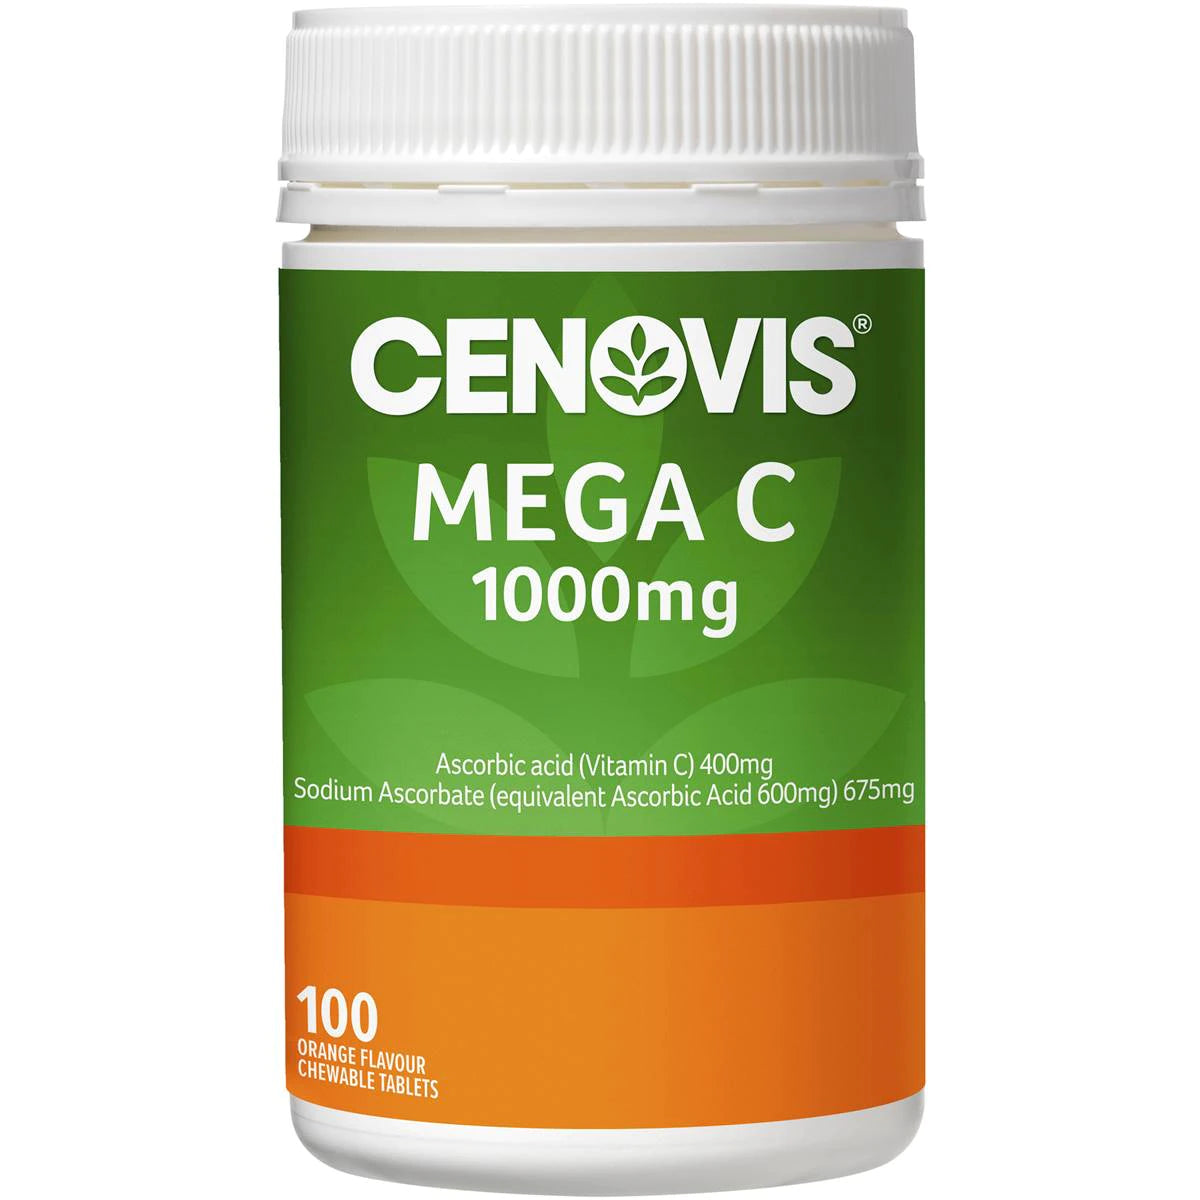 Cenovis Mega C 1000mg Chewable Tablet 100